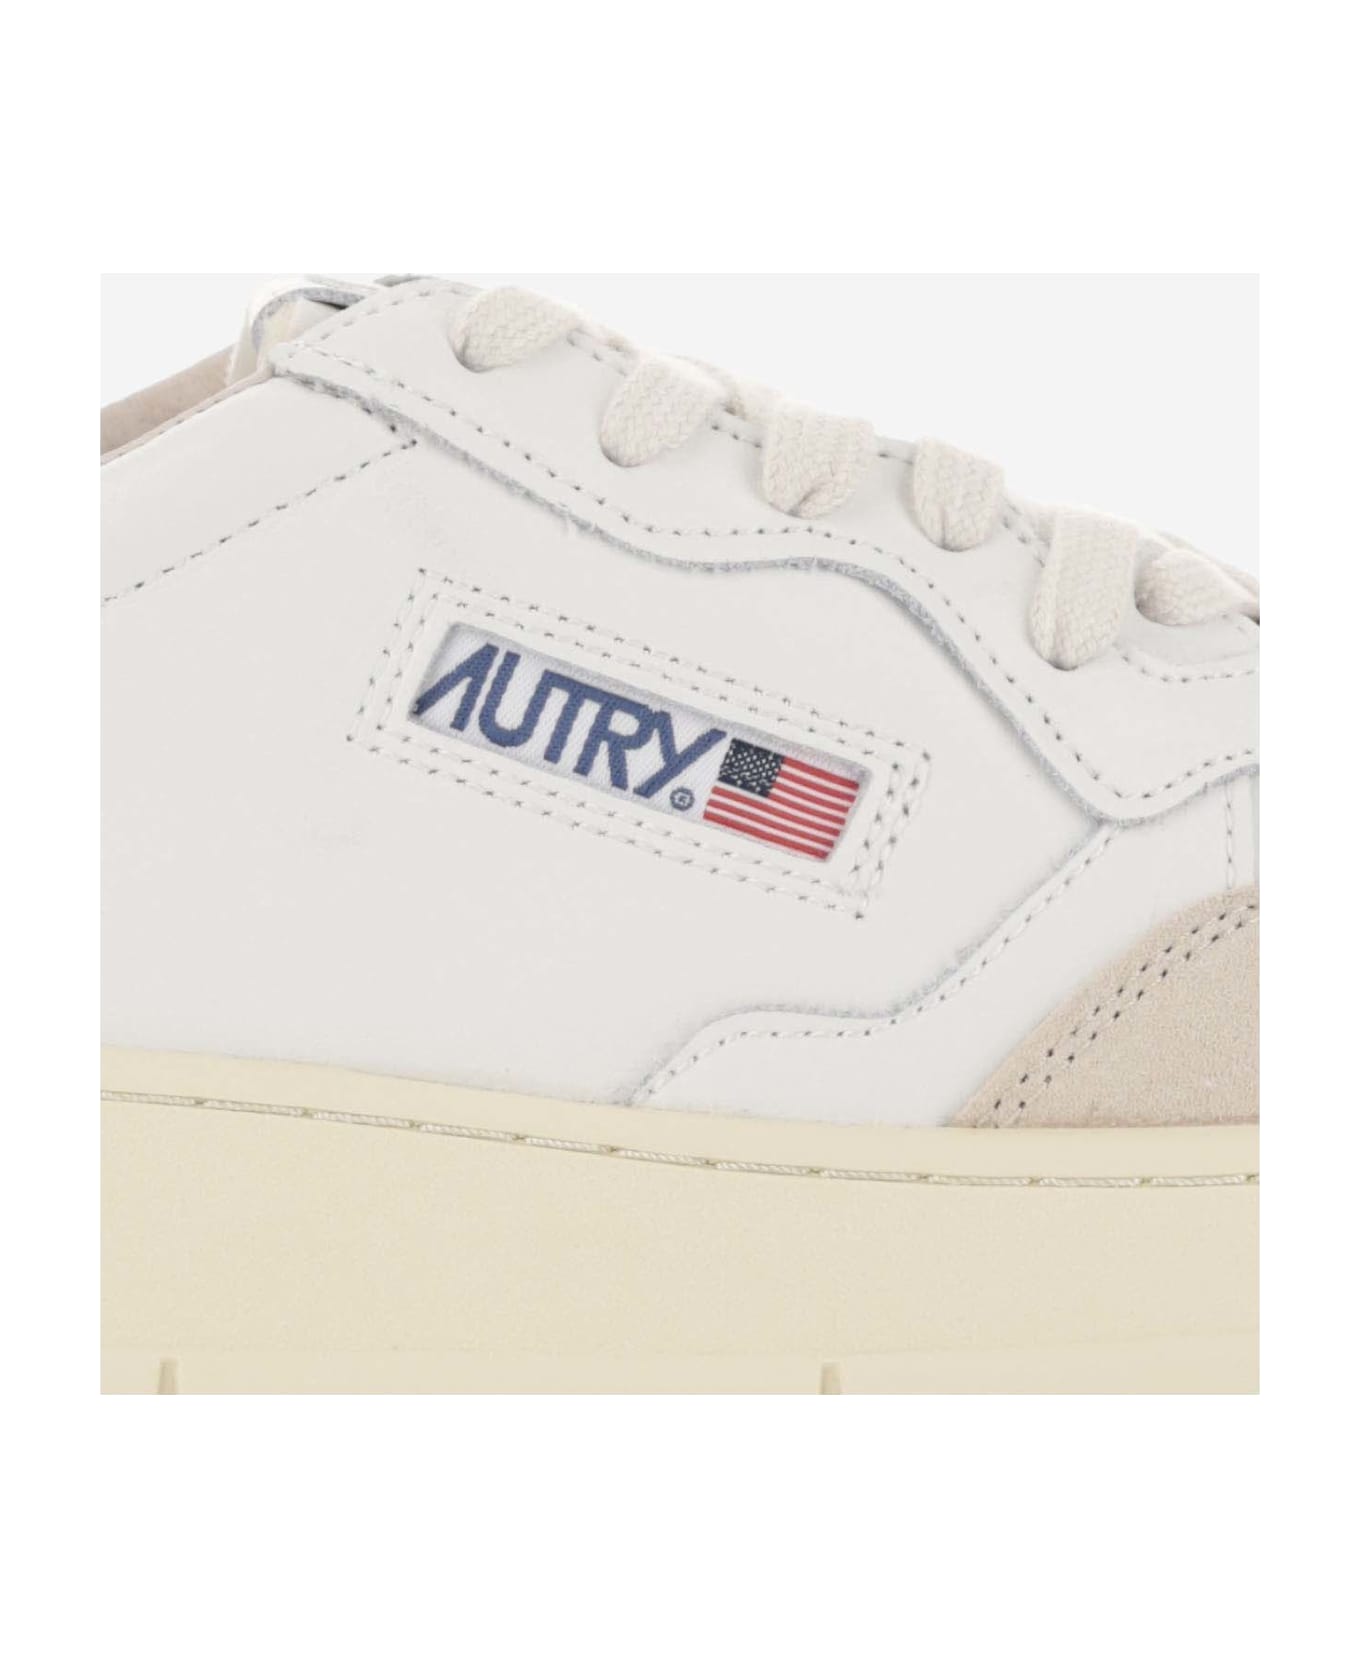 Autry Low Medalist Sneakers - Wht/lemgra スニーカー